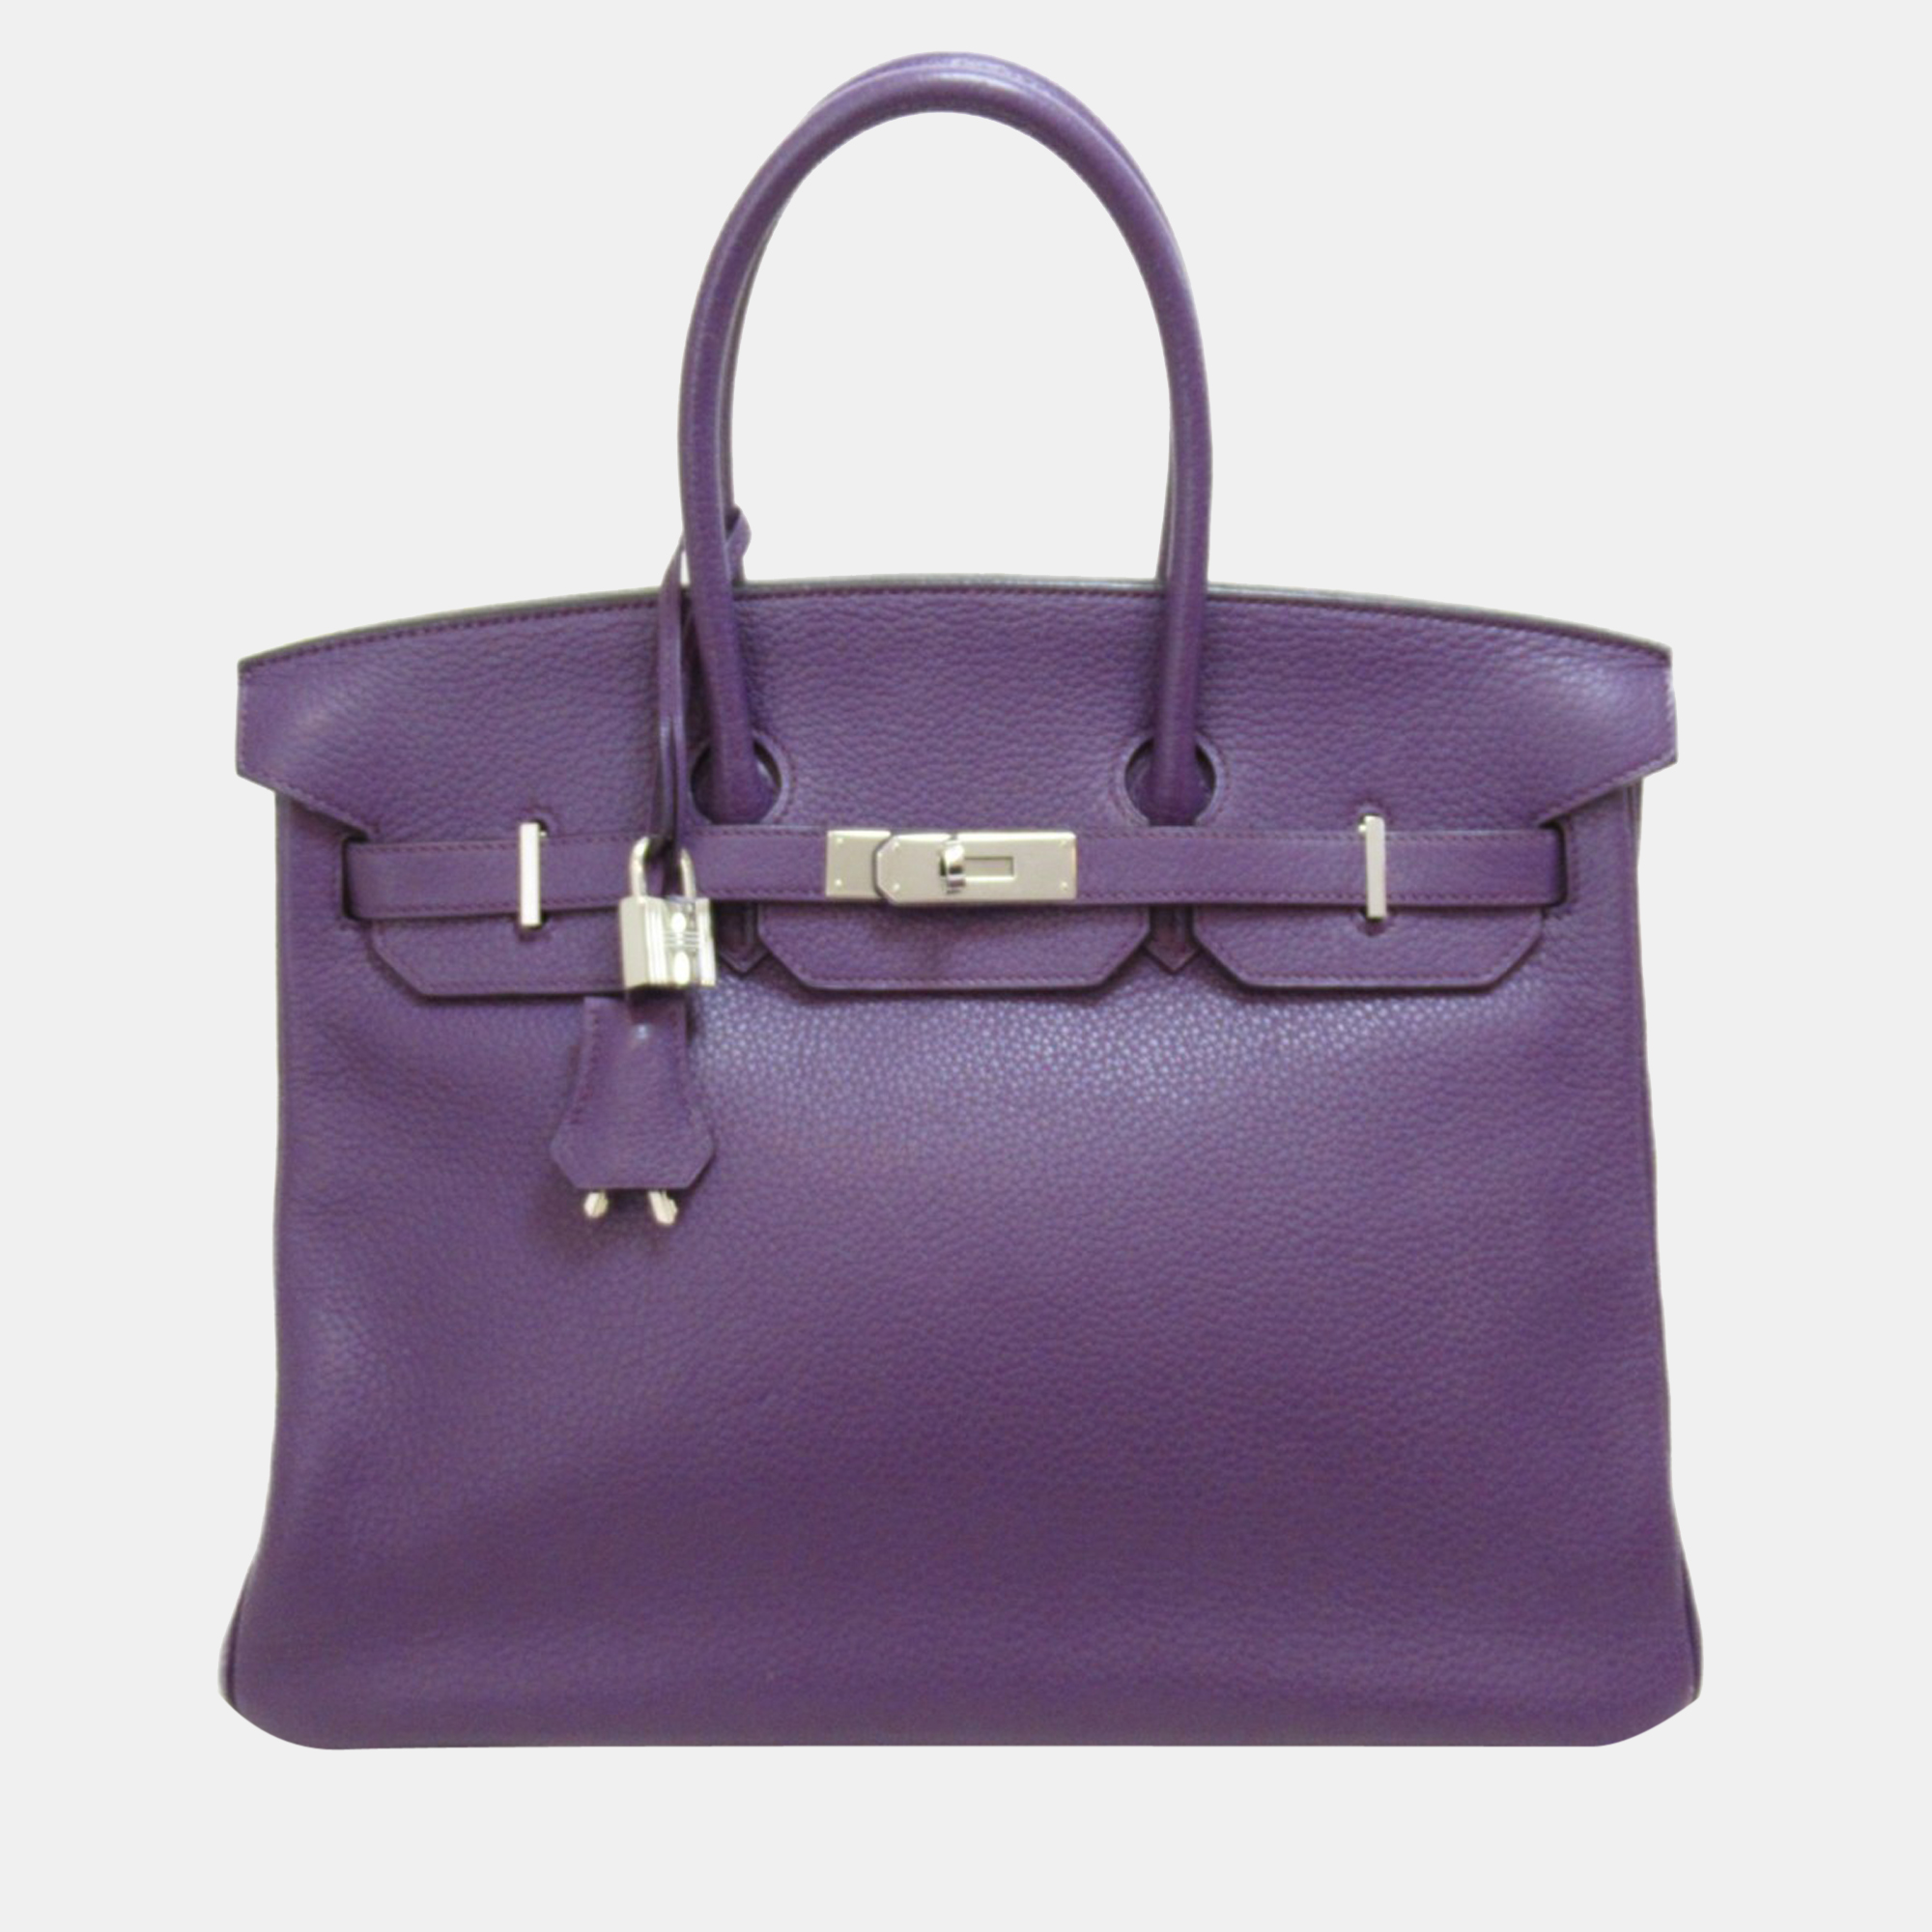 Hermes Purple Togo Leather Palladium Hardware Birkin 35 Bag